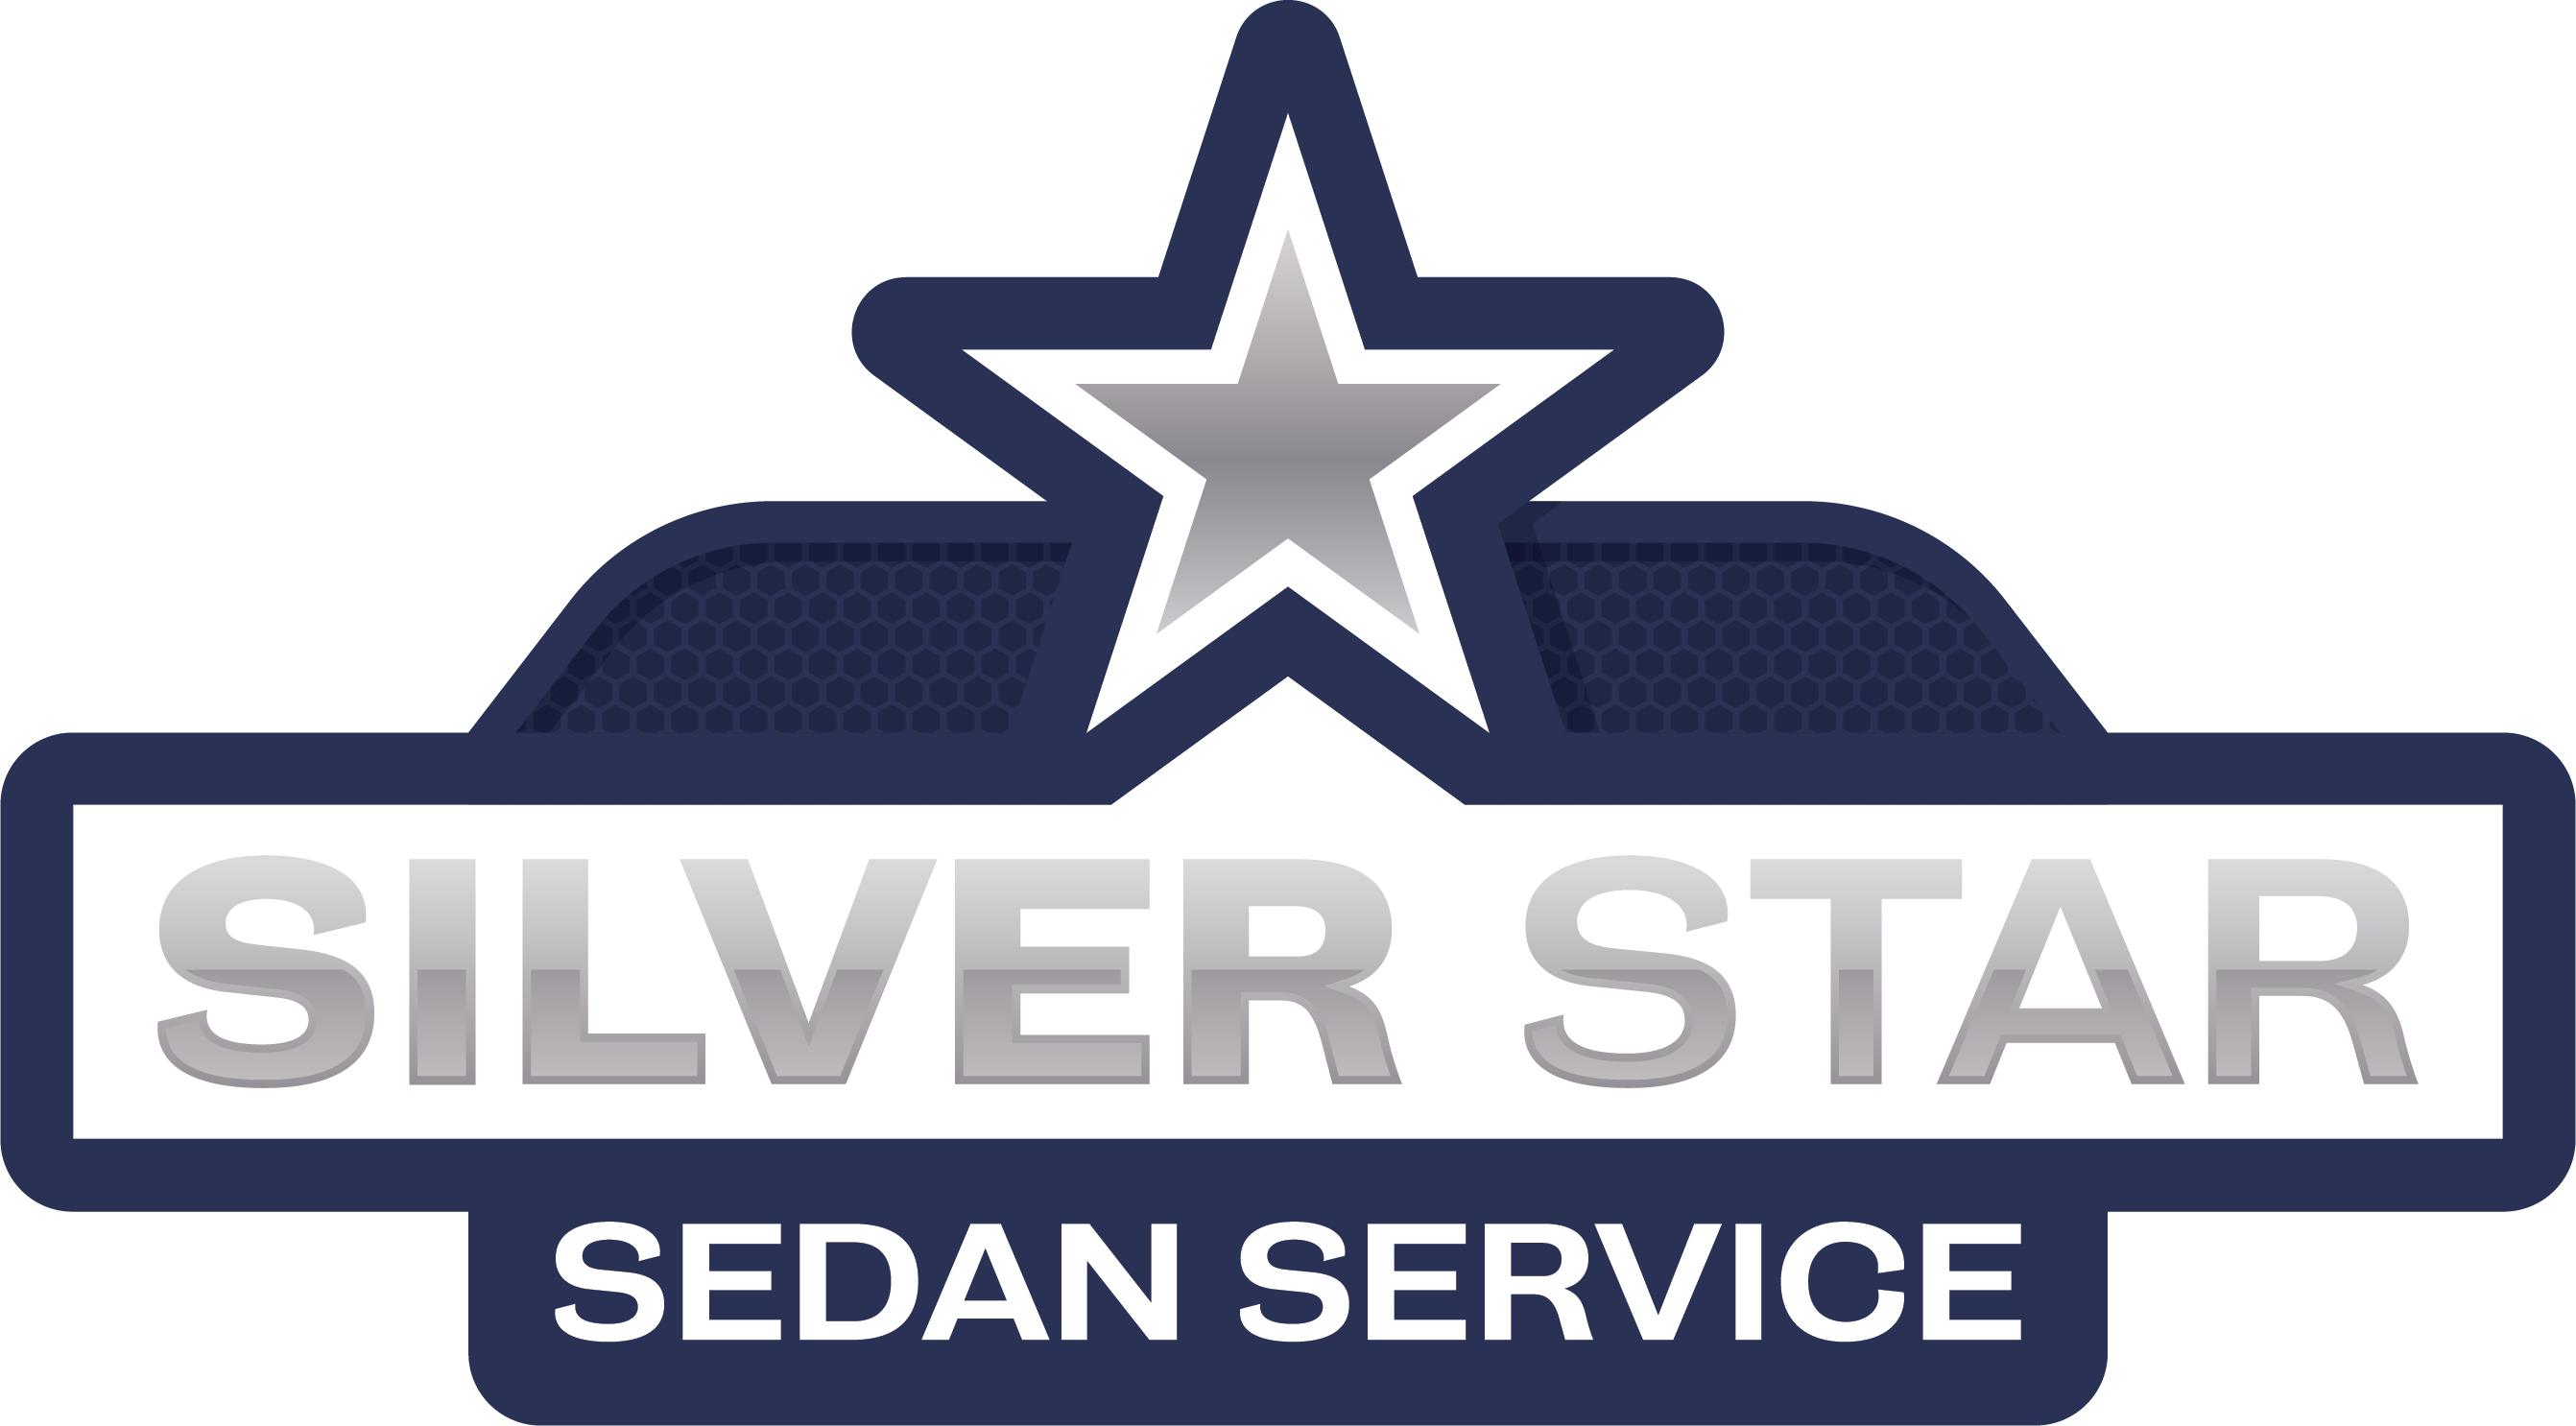 Silver Star Sedan Service